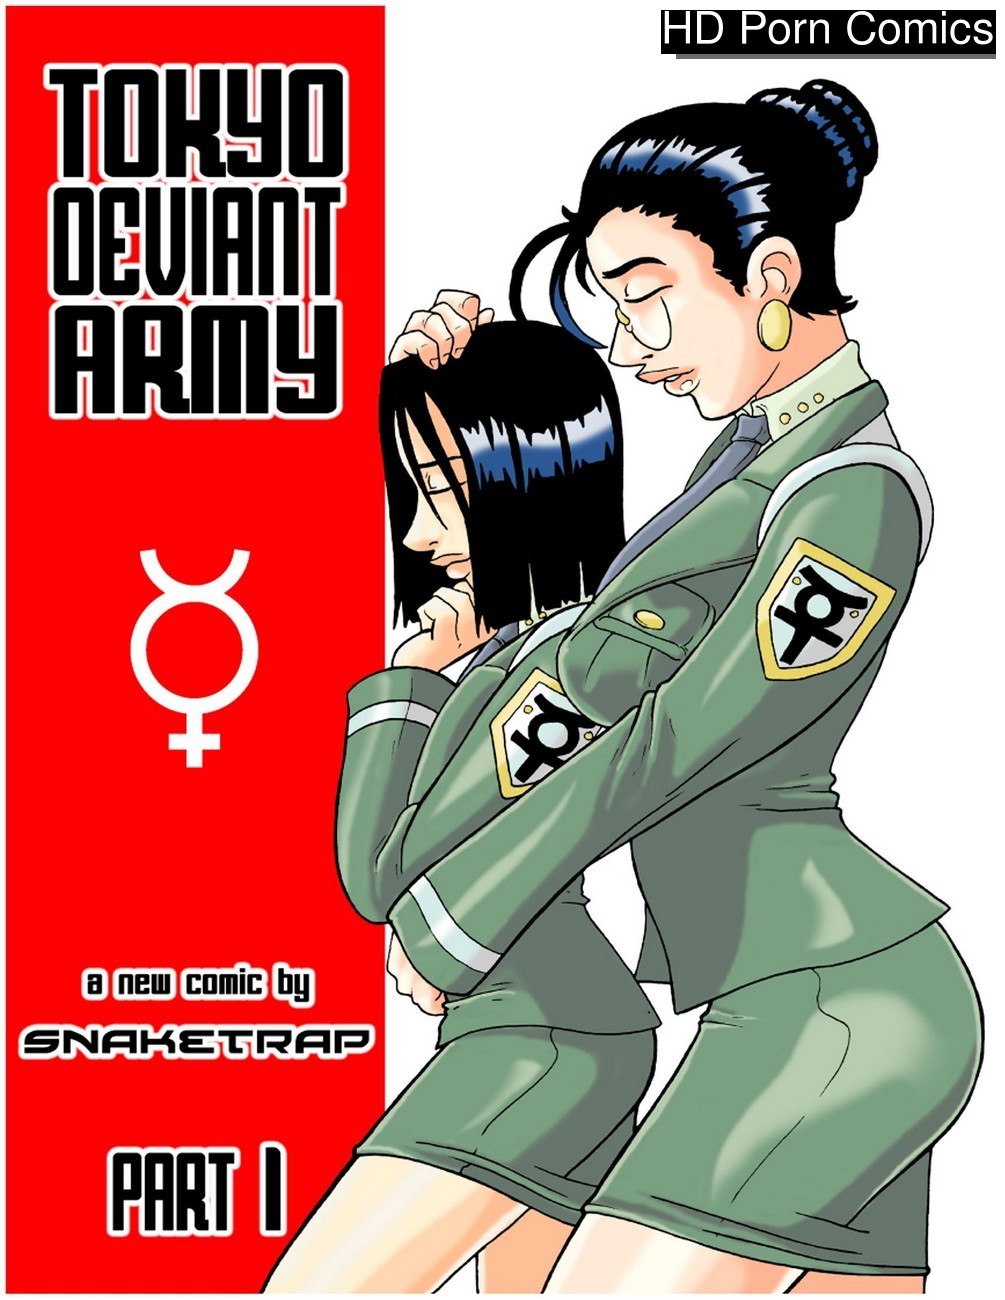 Army porn comics